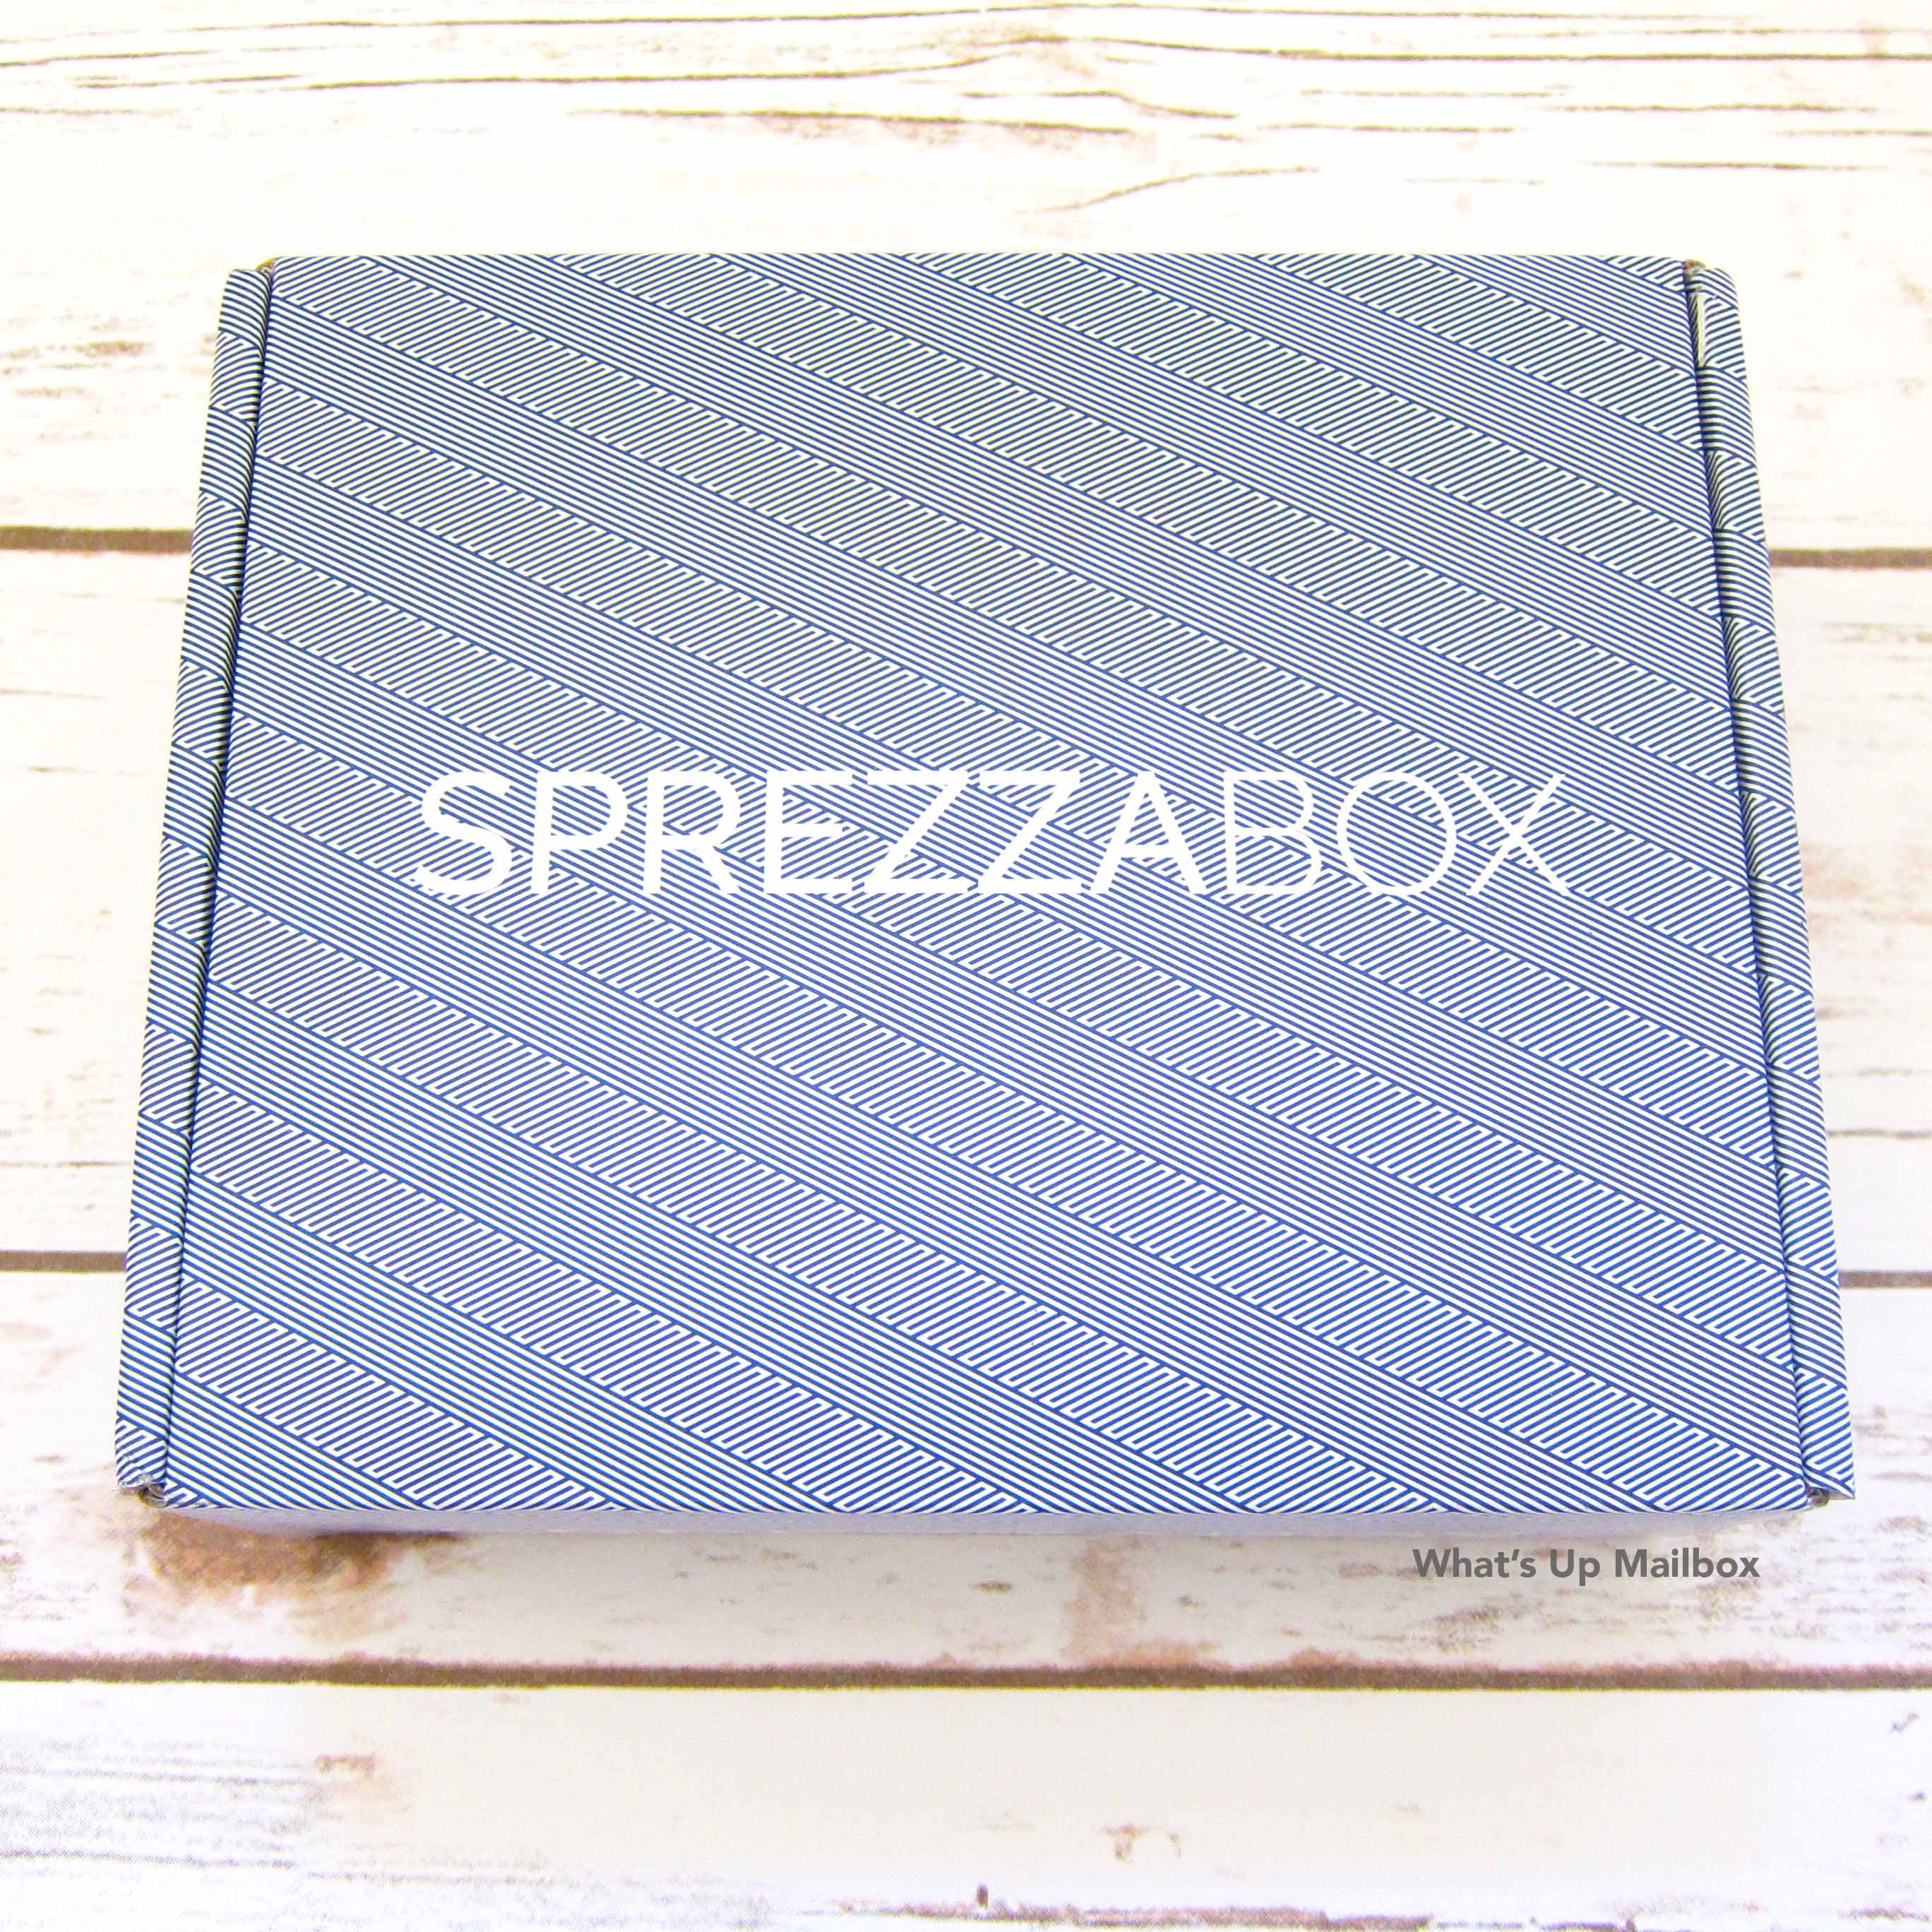 Sprezza Box July 2016 Box